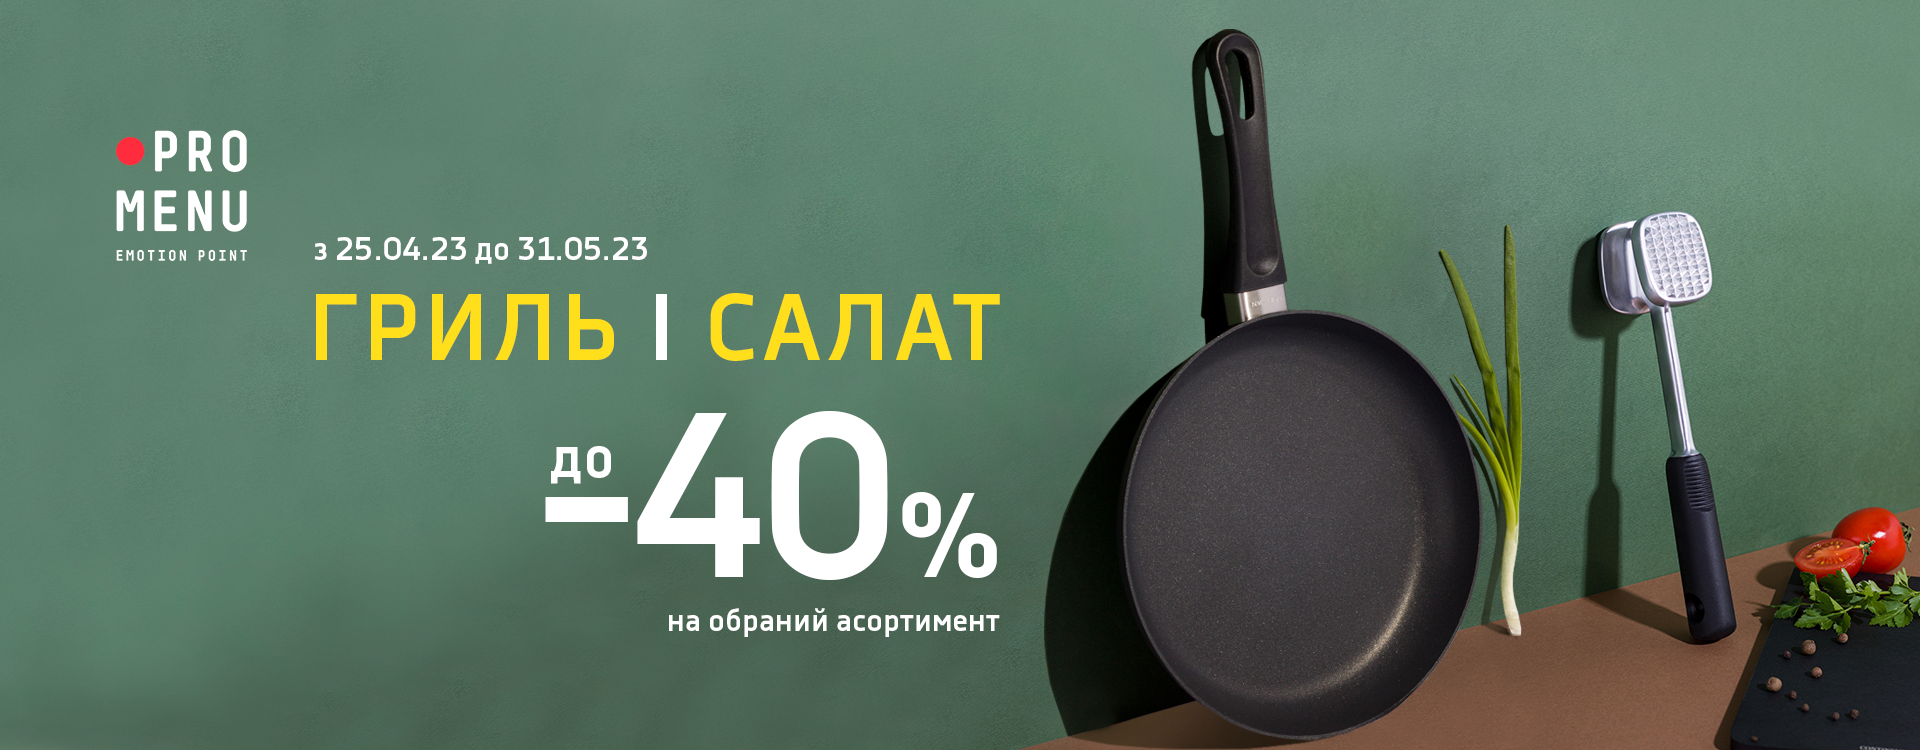 PROMENU gives 40% on pans